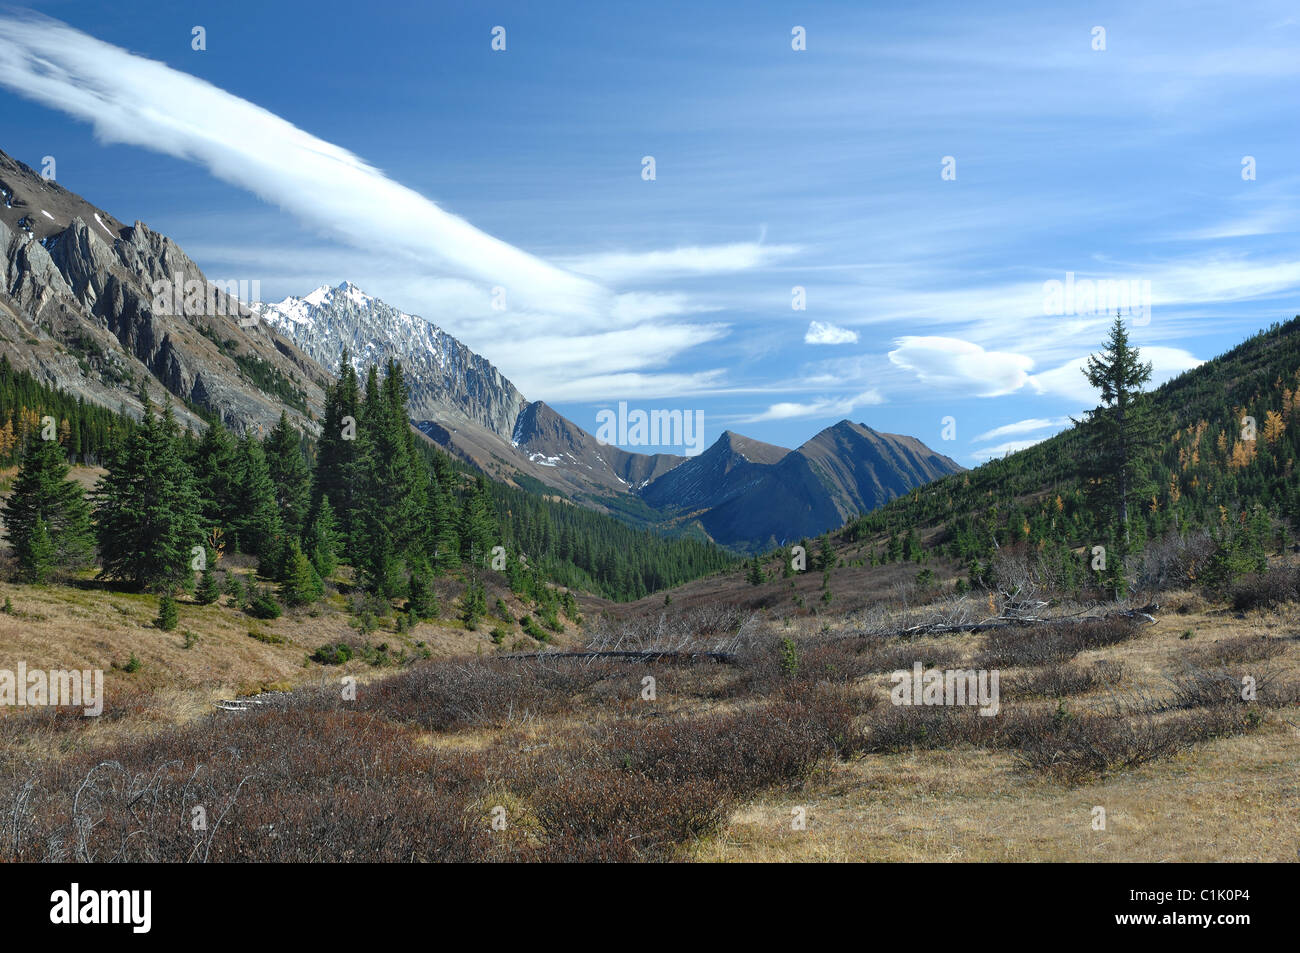 Scenic mountain view in Kananaskis Country, Alberta, Canada Stock Photo